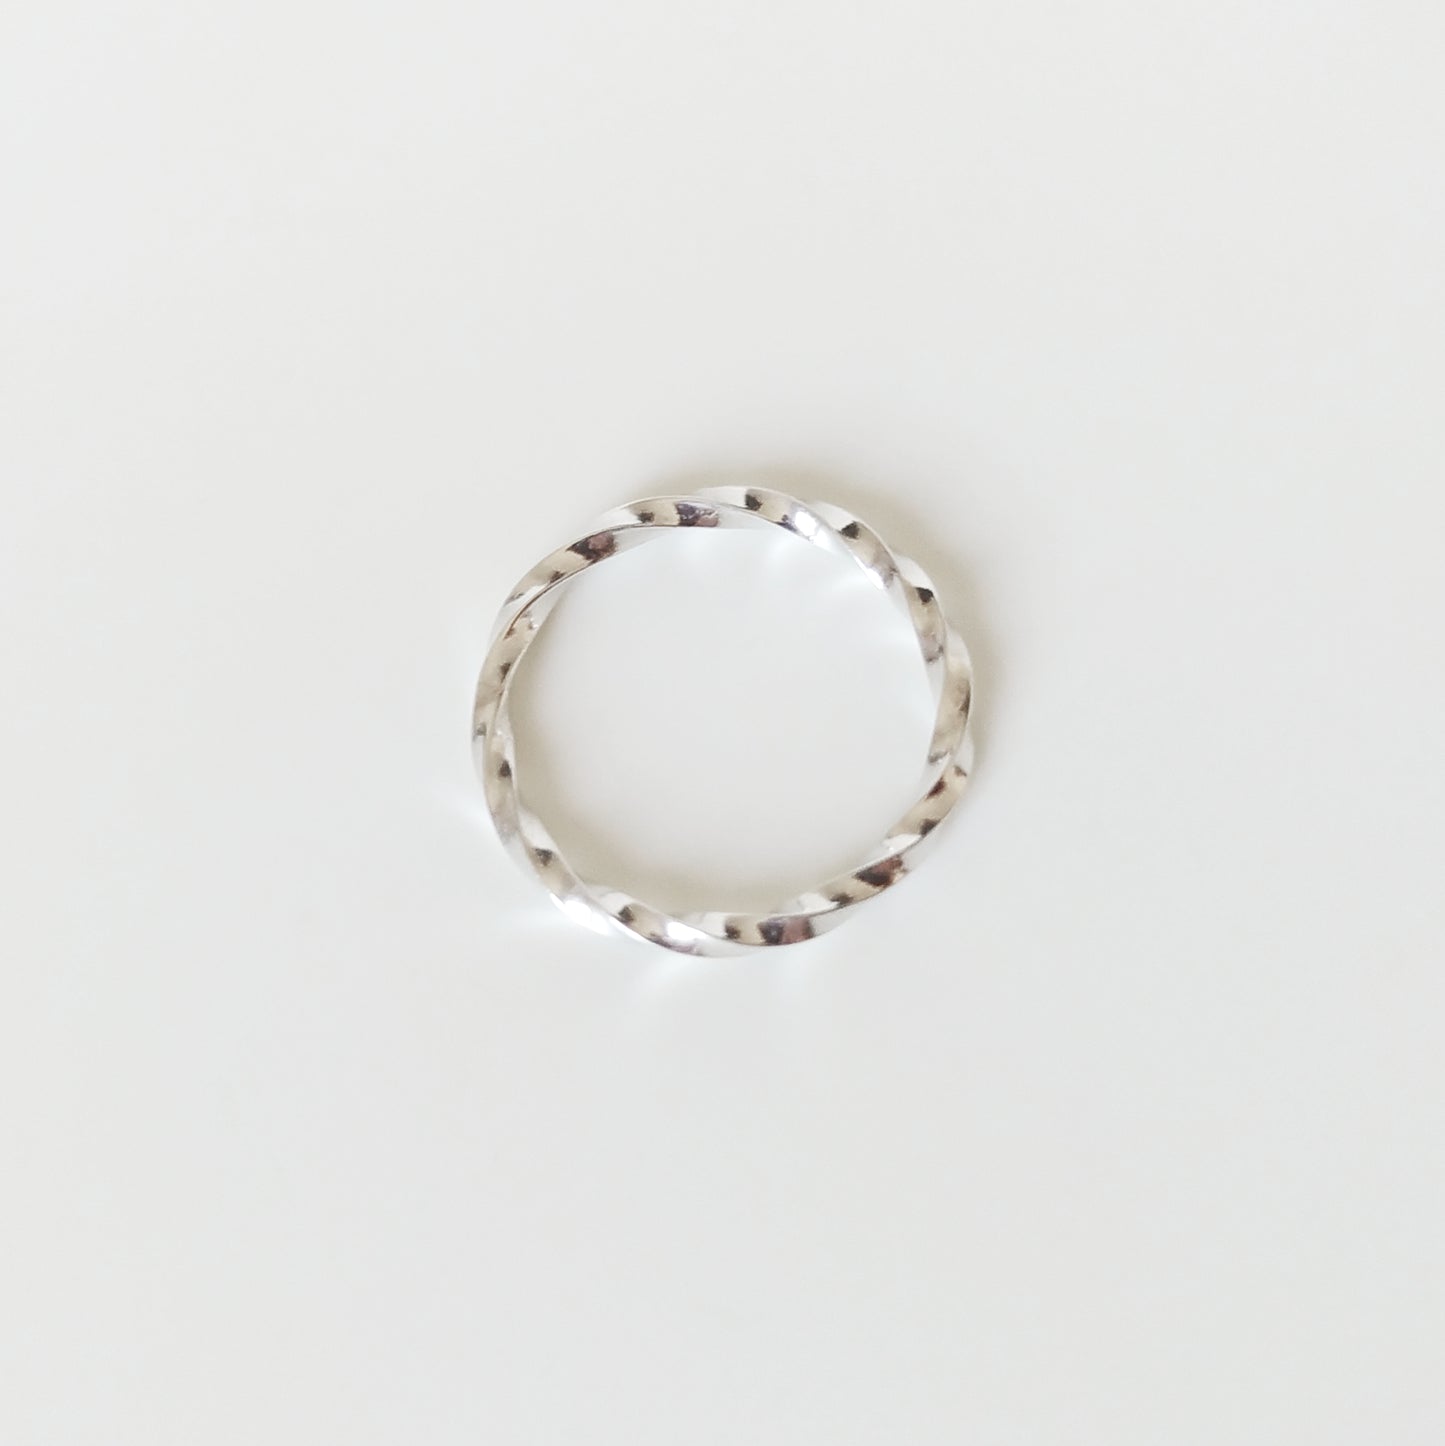 gedrehter Ring aus Silber | Darian